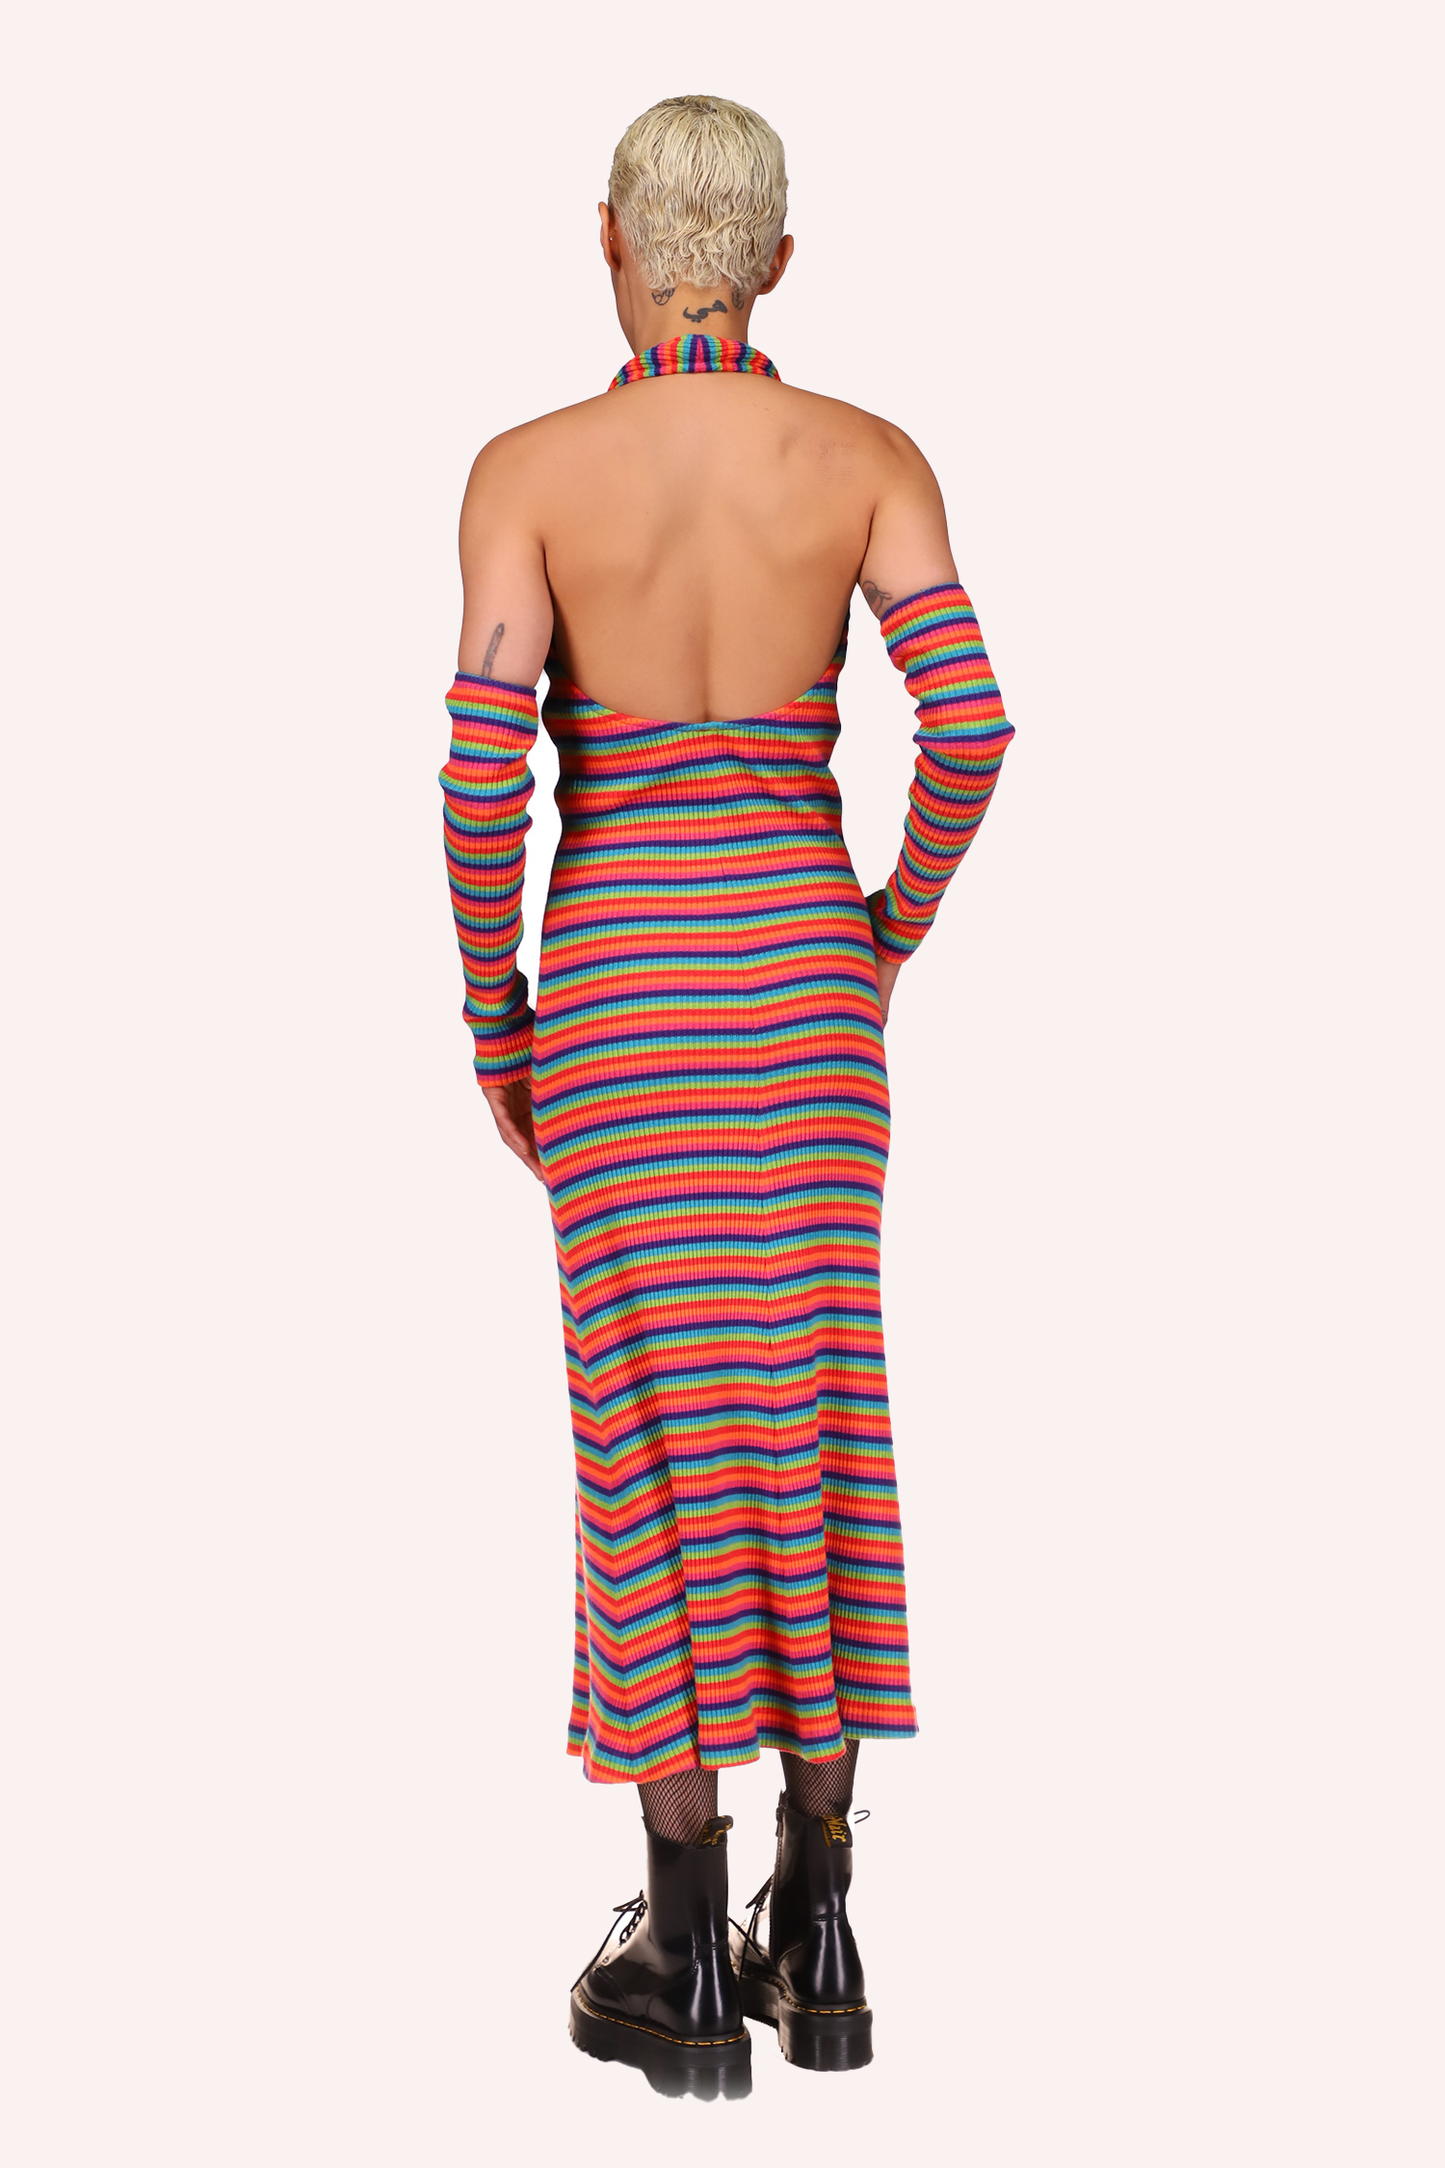 Rainbow Stripe Halter Dress features a deep cut on the back, mid-calf long sleeveless